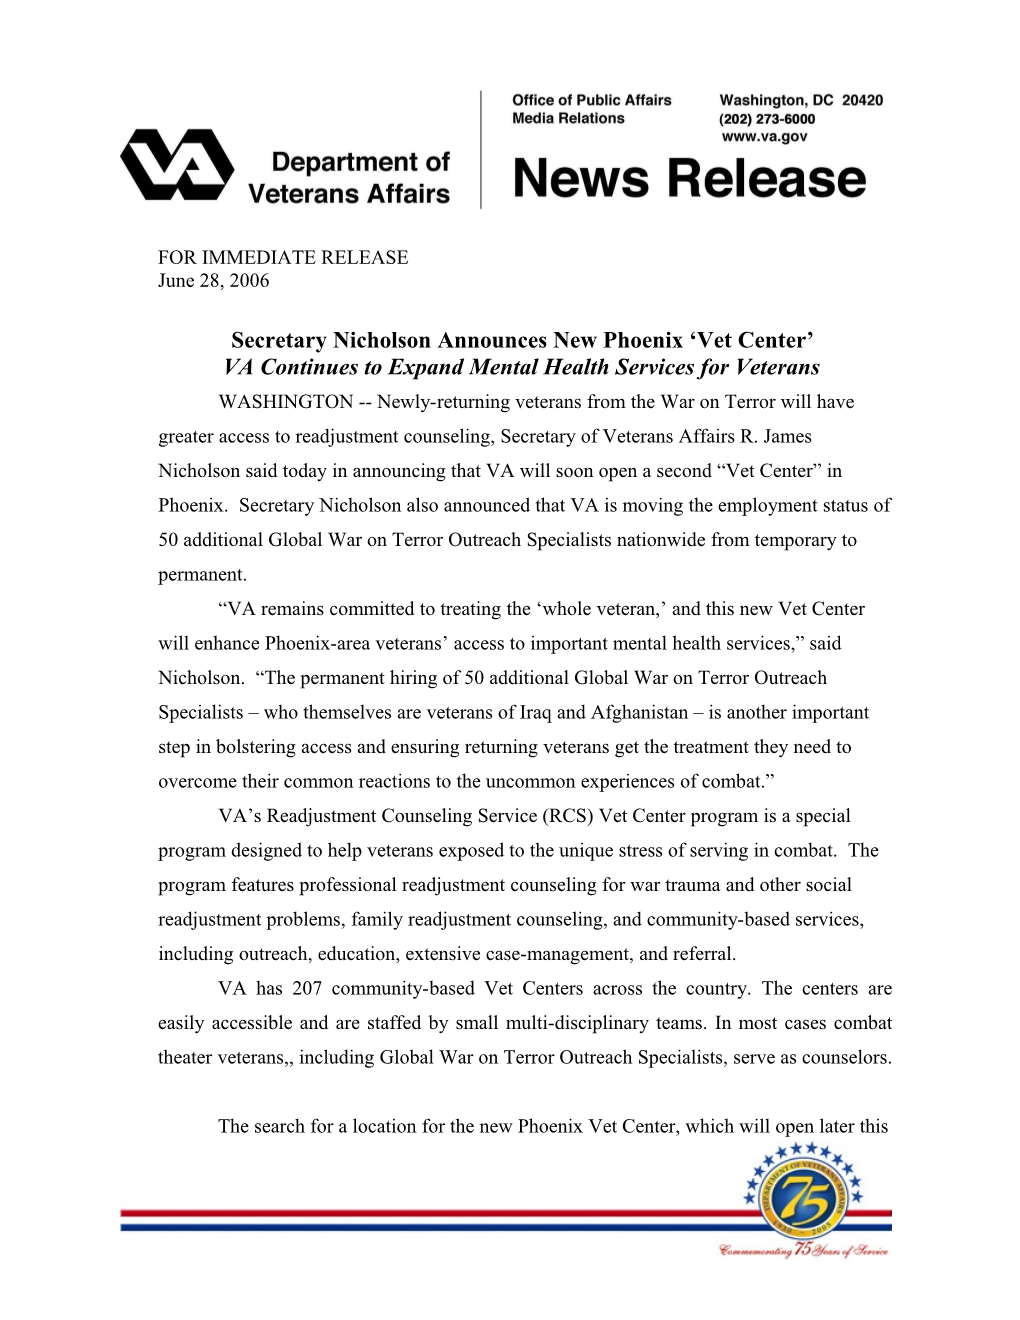 Secretary Nicholson Announces New Phoenix Vetcenter